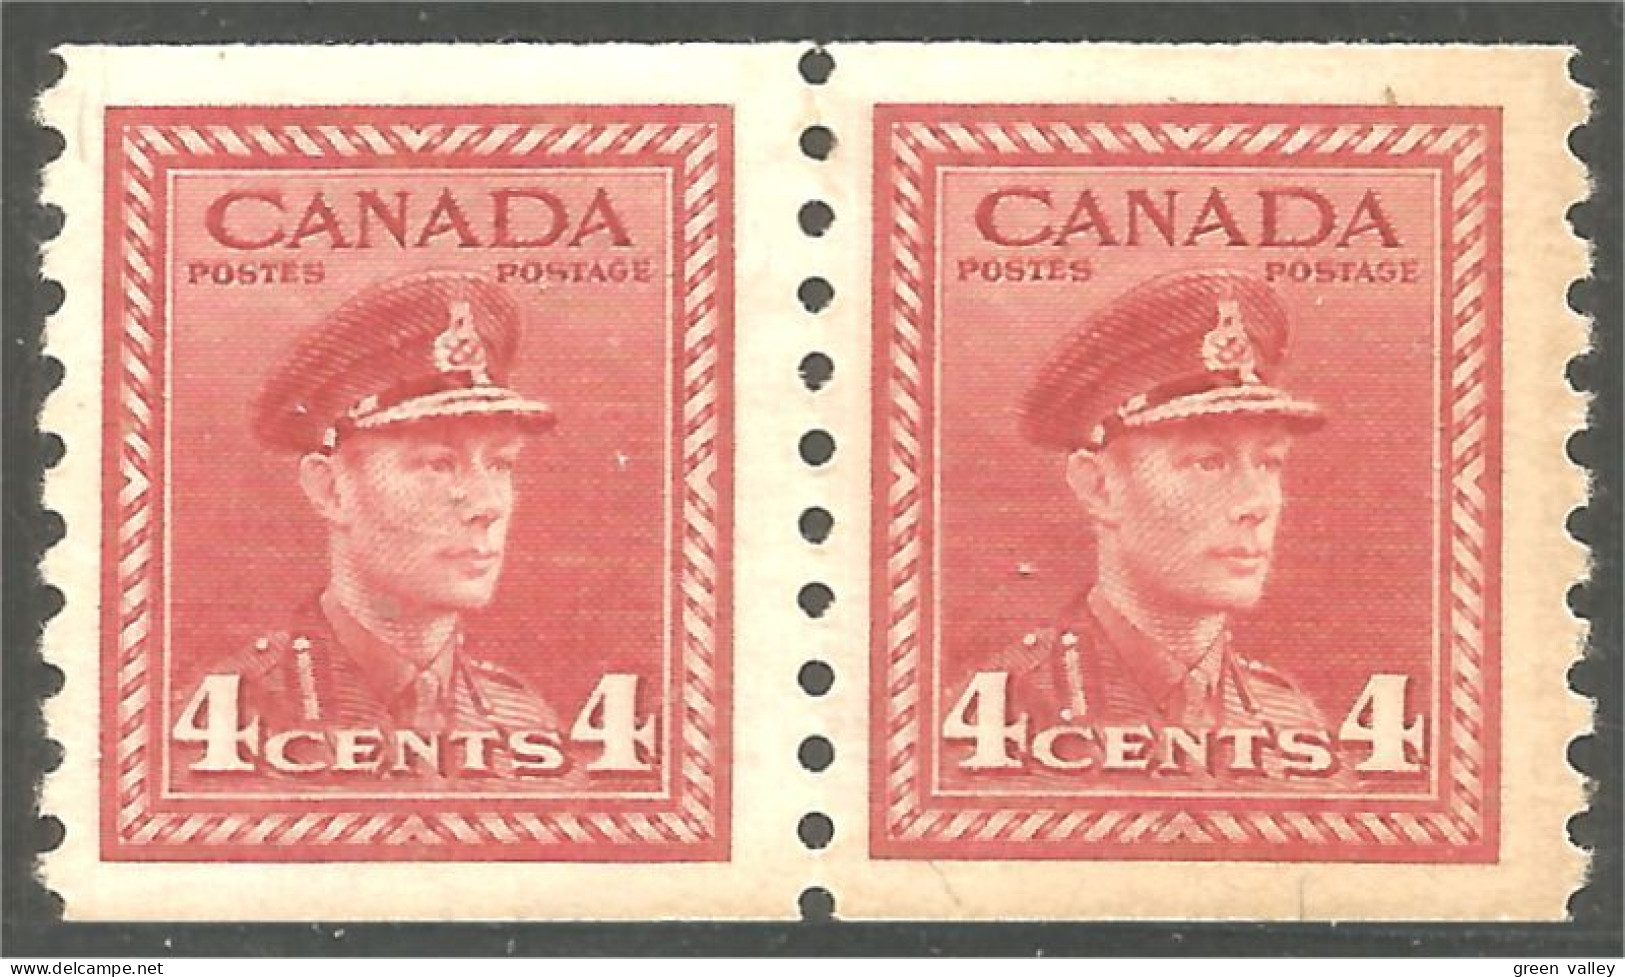 951 Canada 1942 #264 Roi King George VI 4c Carmine War Issue Roulette Coil PAIR MH * Neuf CV $16.00 VF (456) - Nuevos